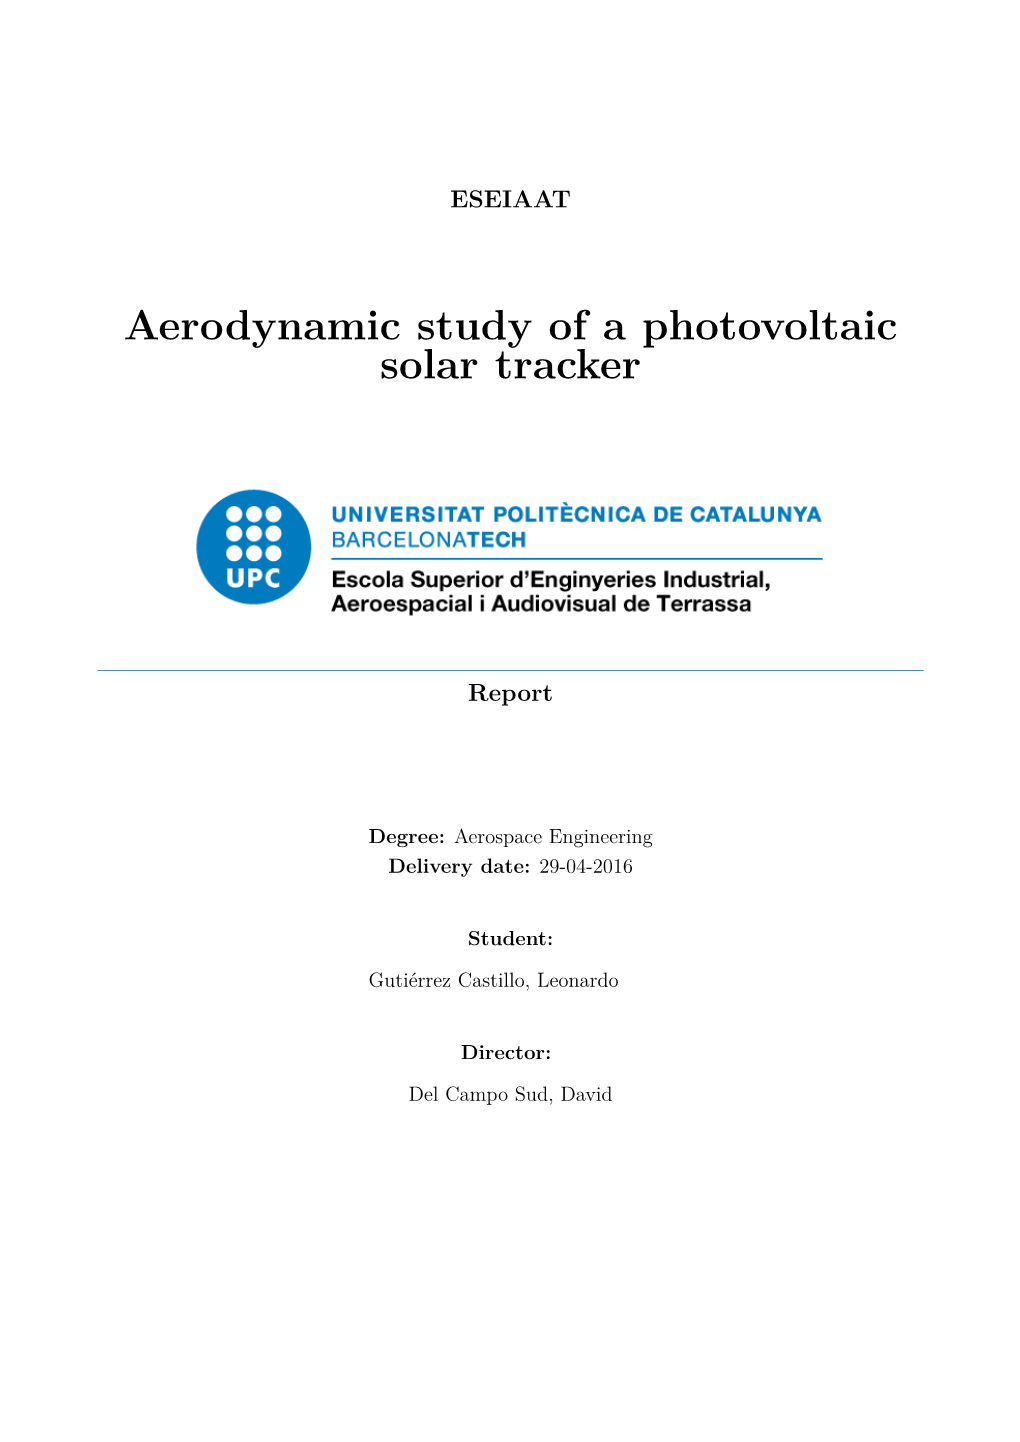 Aerodynamic Study of a Photovoltaic Solar Tracker